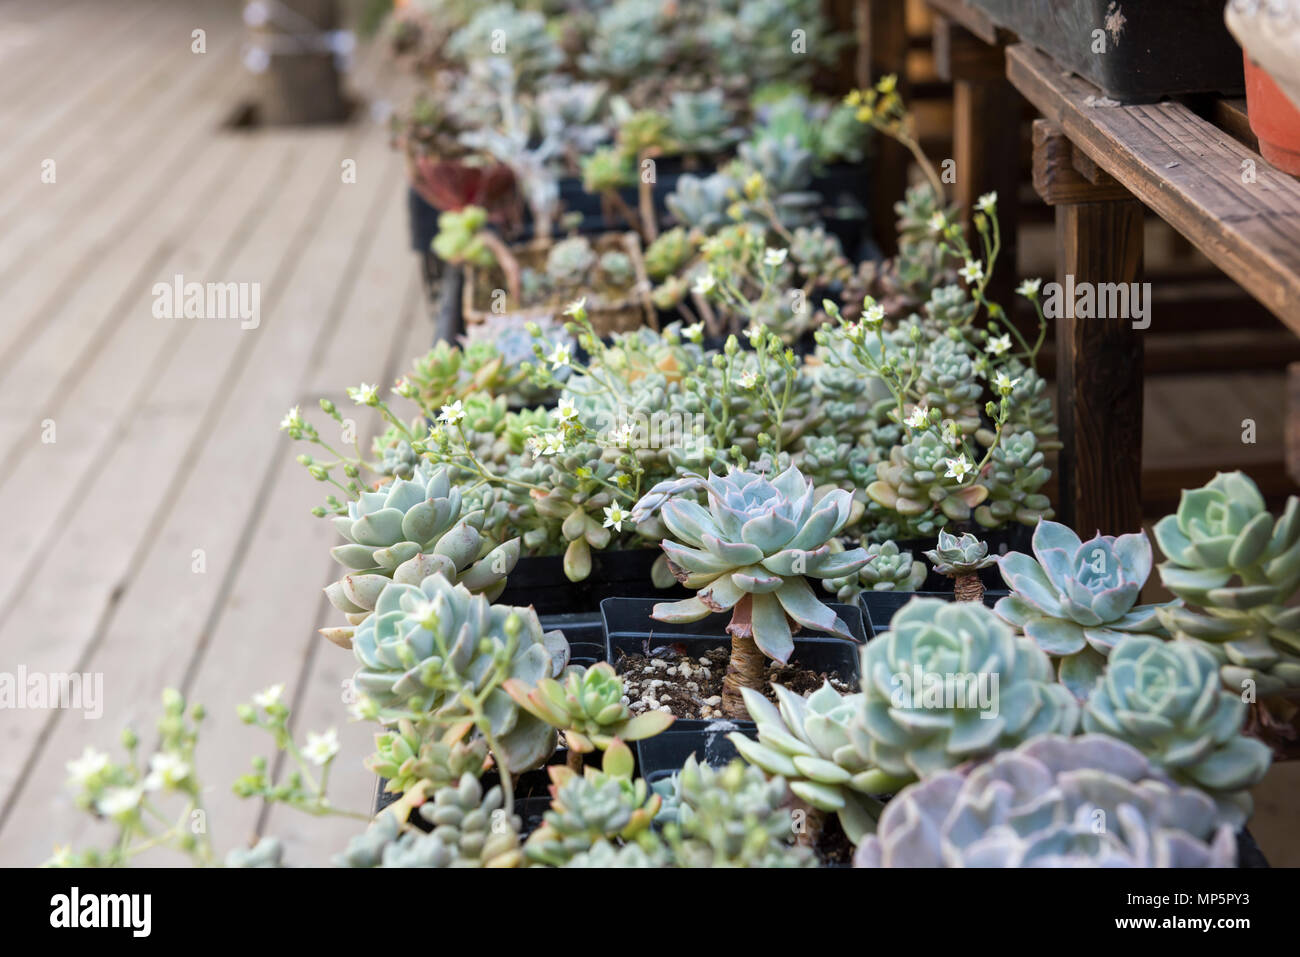 Closeup of succulent plants Stock Photo